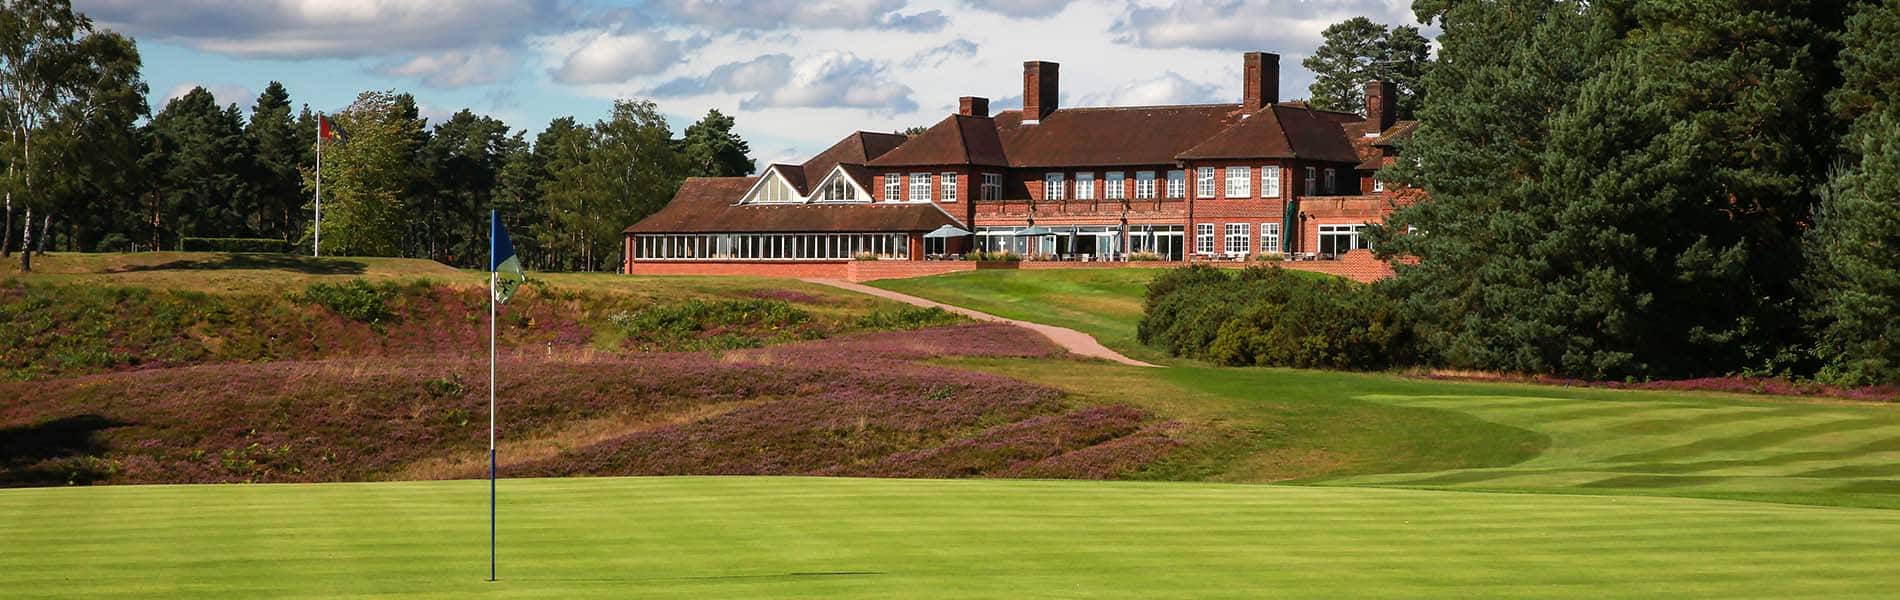 The Berkshire Golf Club- Club House 